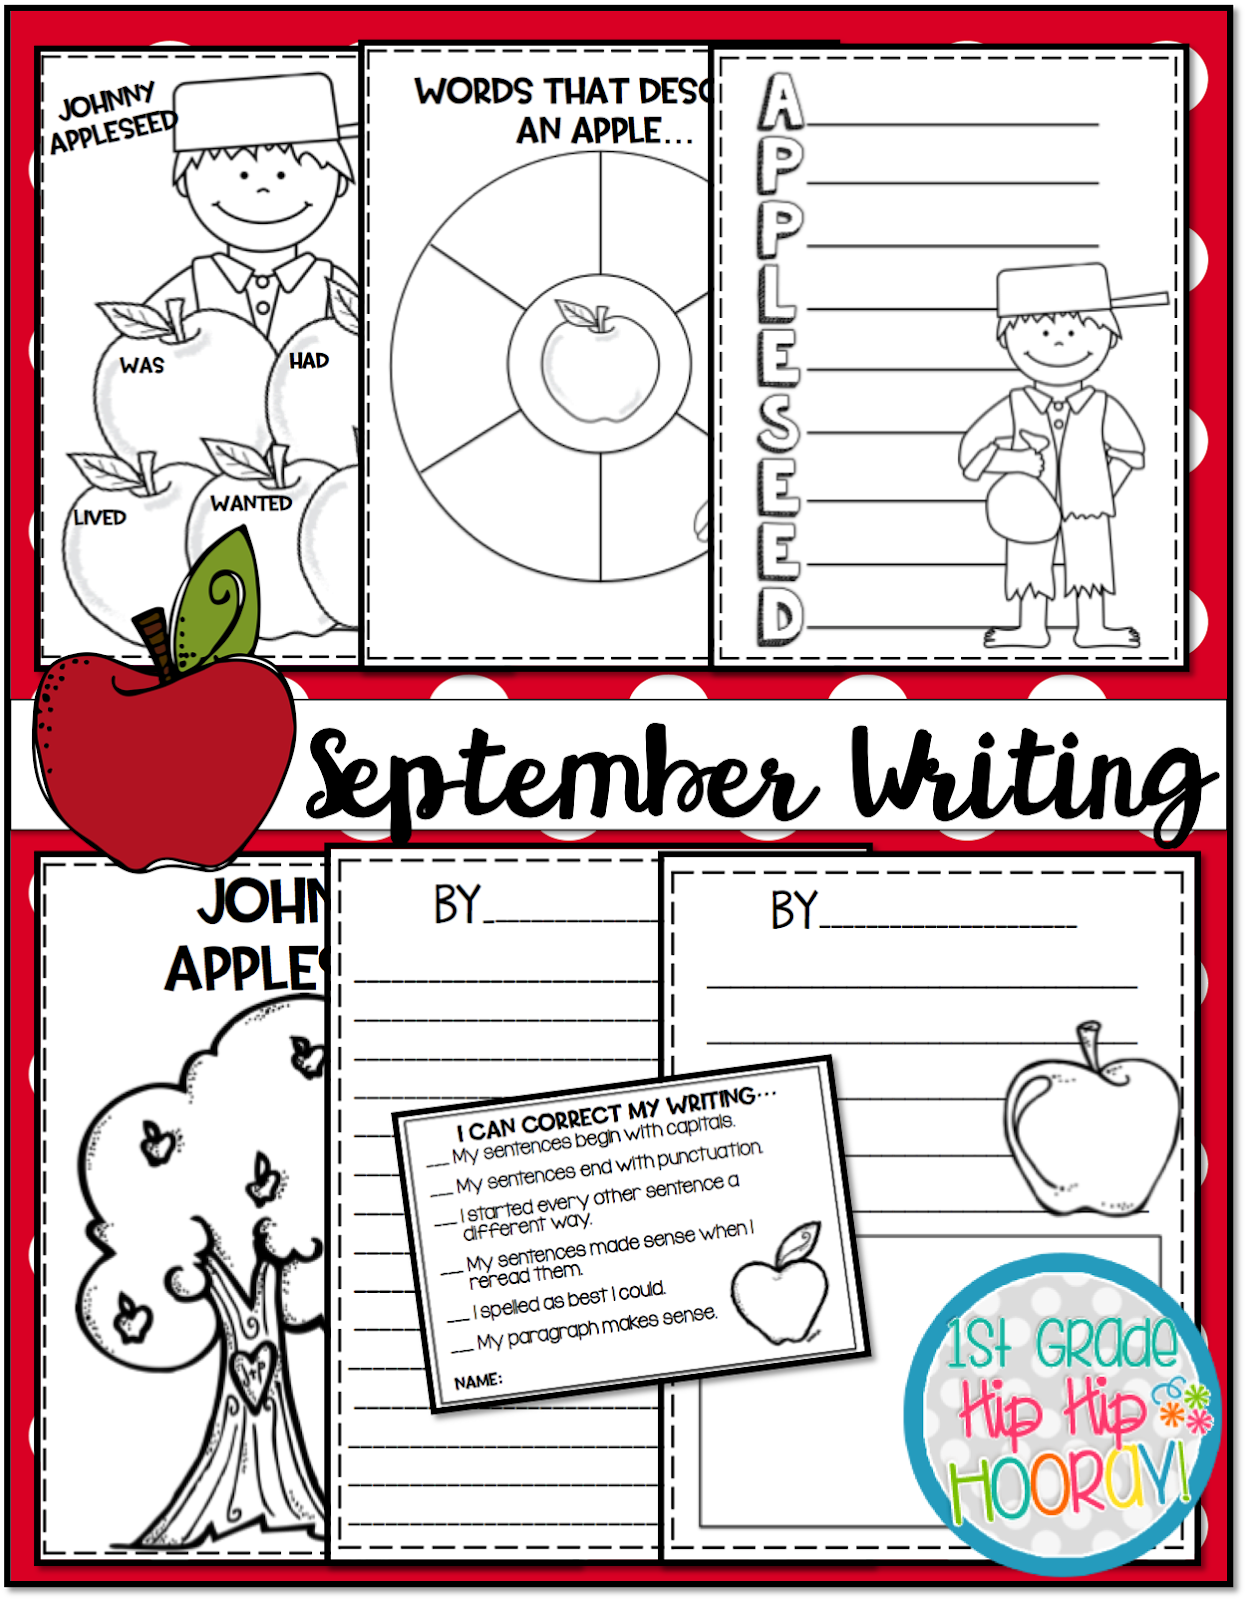 1st Grade Hip Hip Hooray!: September...Johnny Appleseed, Apples and ...